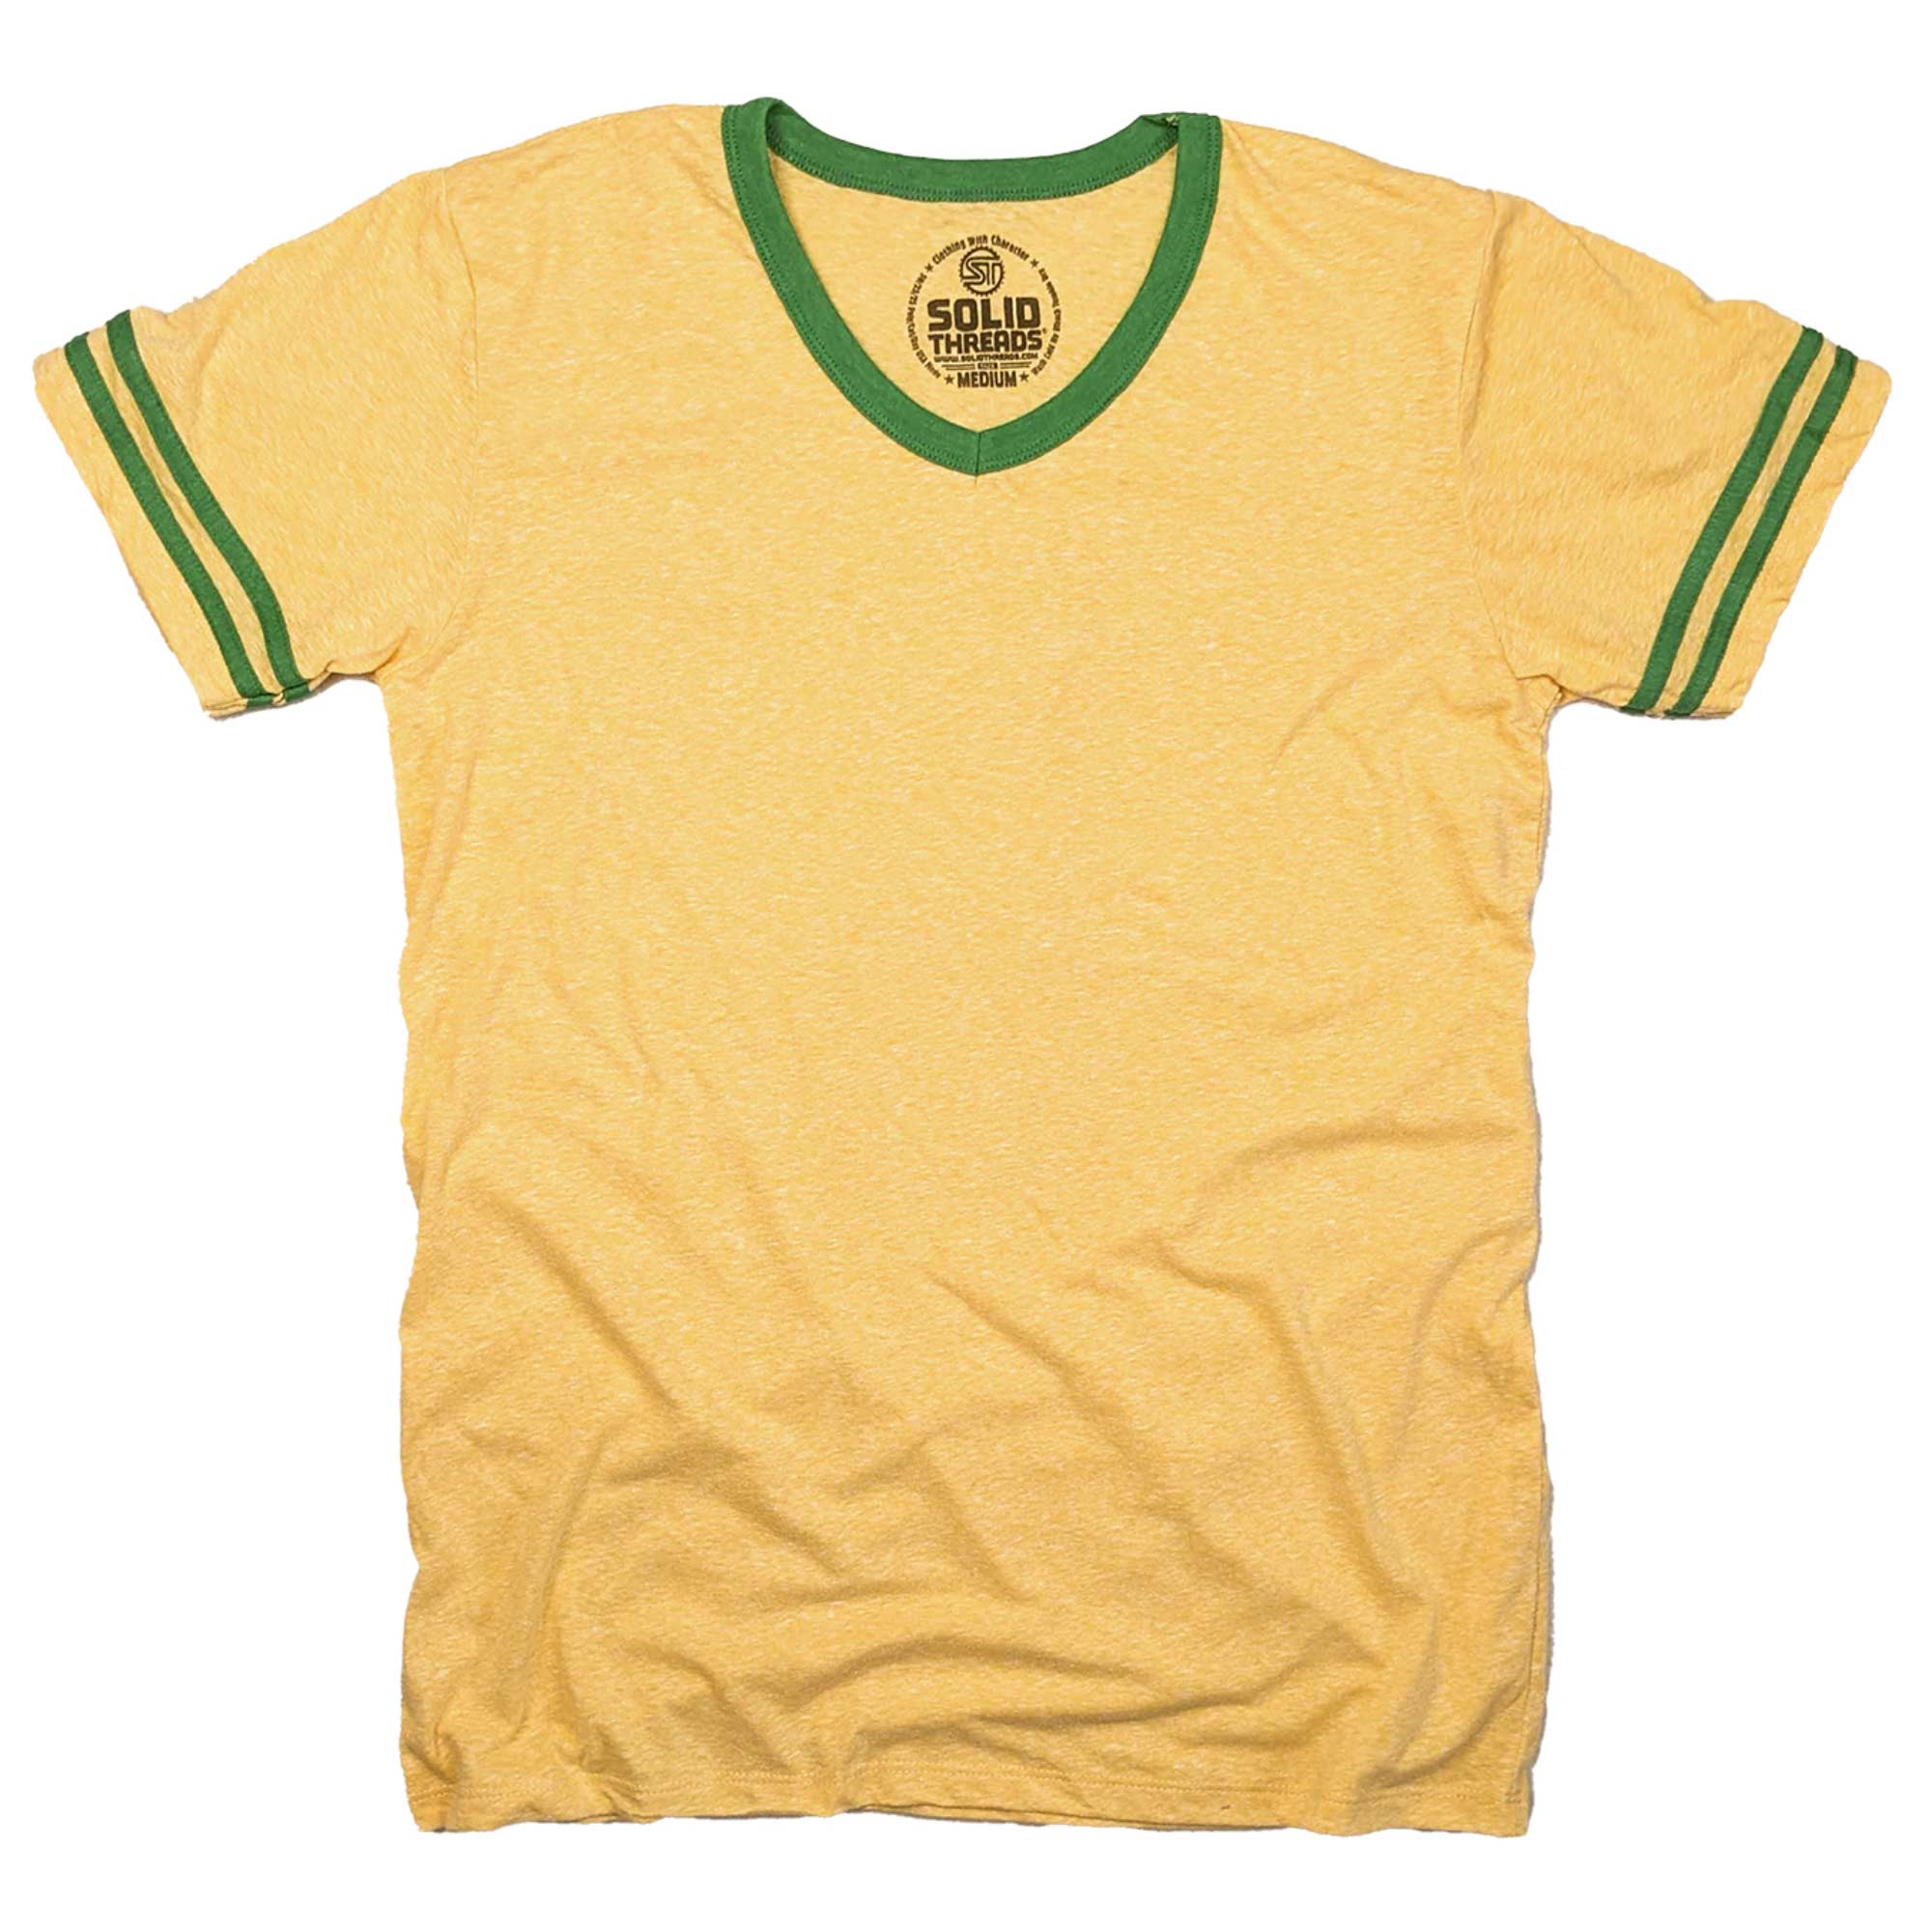 Men's Retro Ringer V-neck T-shirt Triblend Gold/Kelly/Gold | Super Soft Vintage Inspired Tee | USA Made